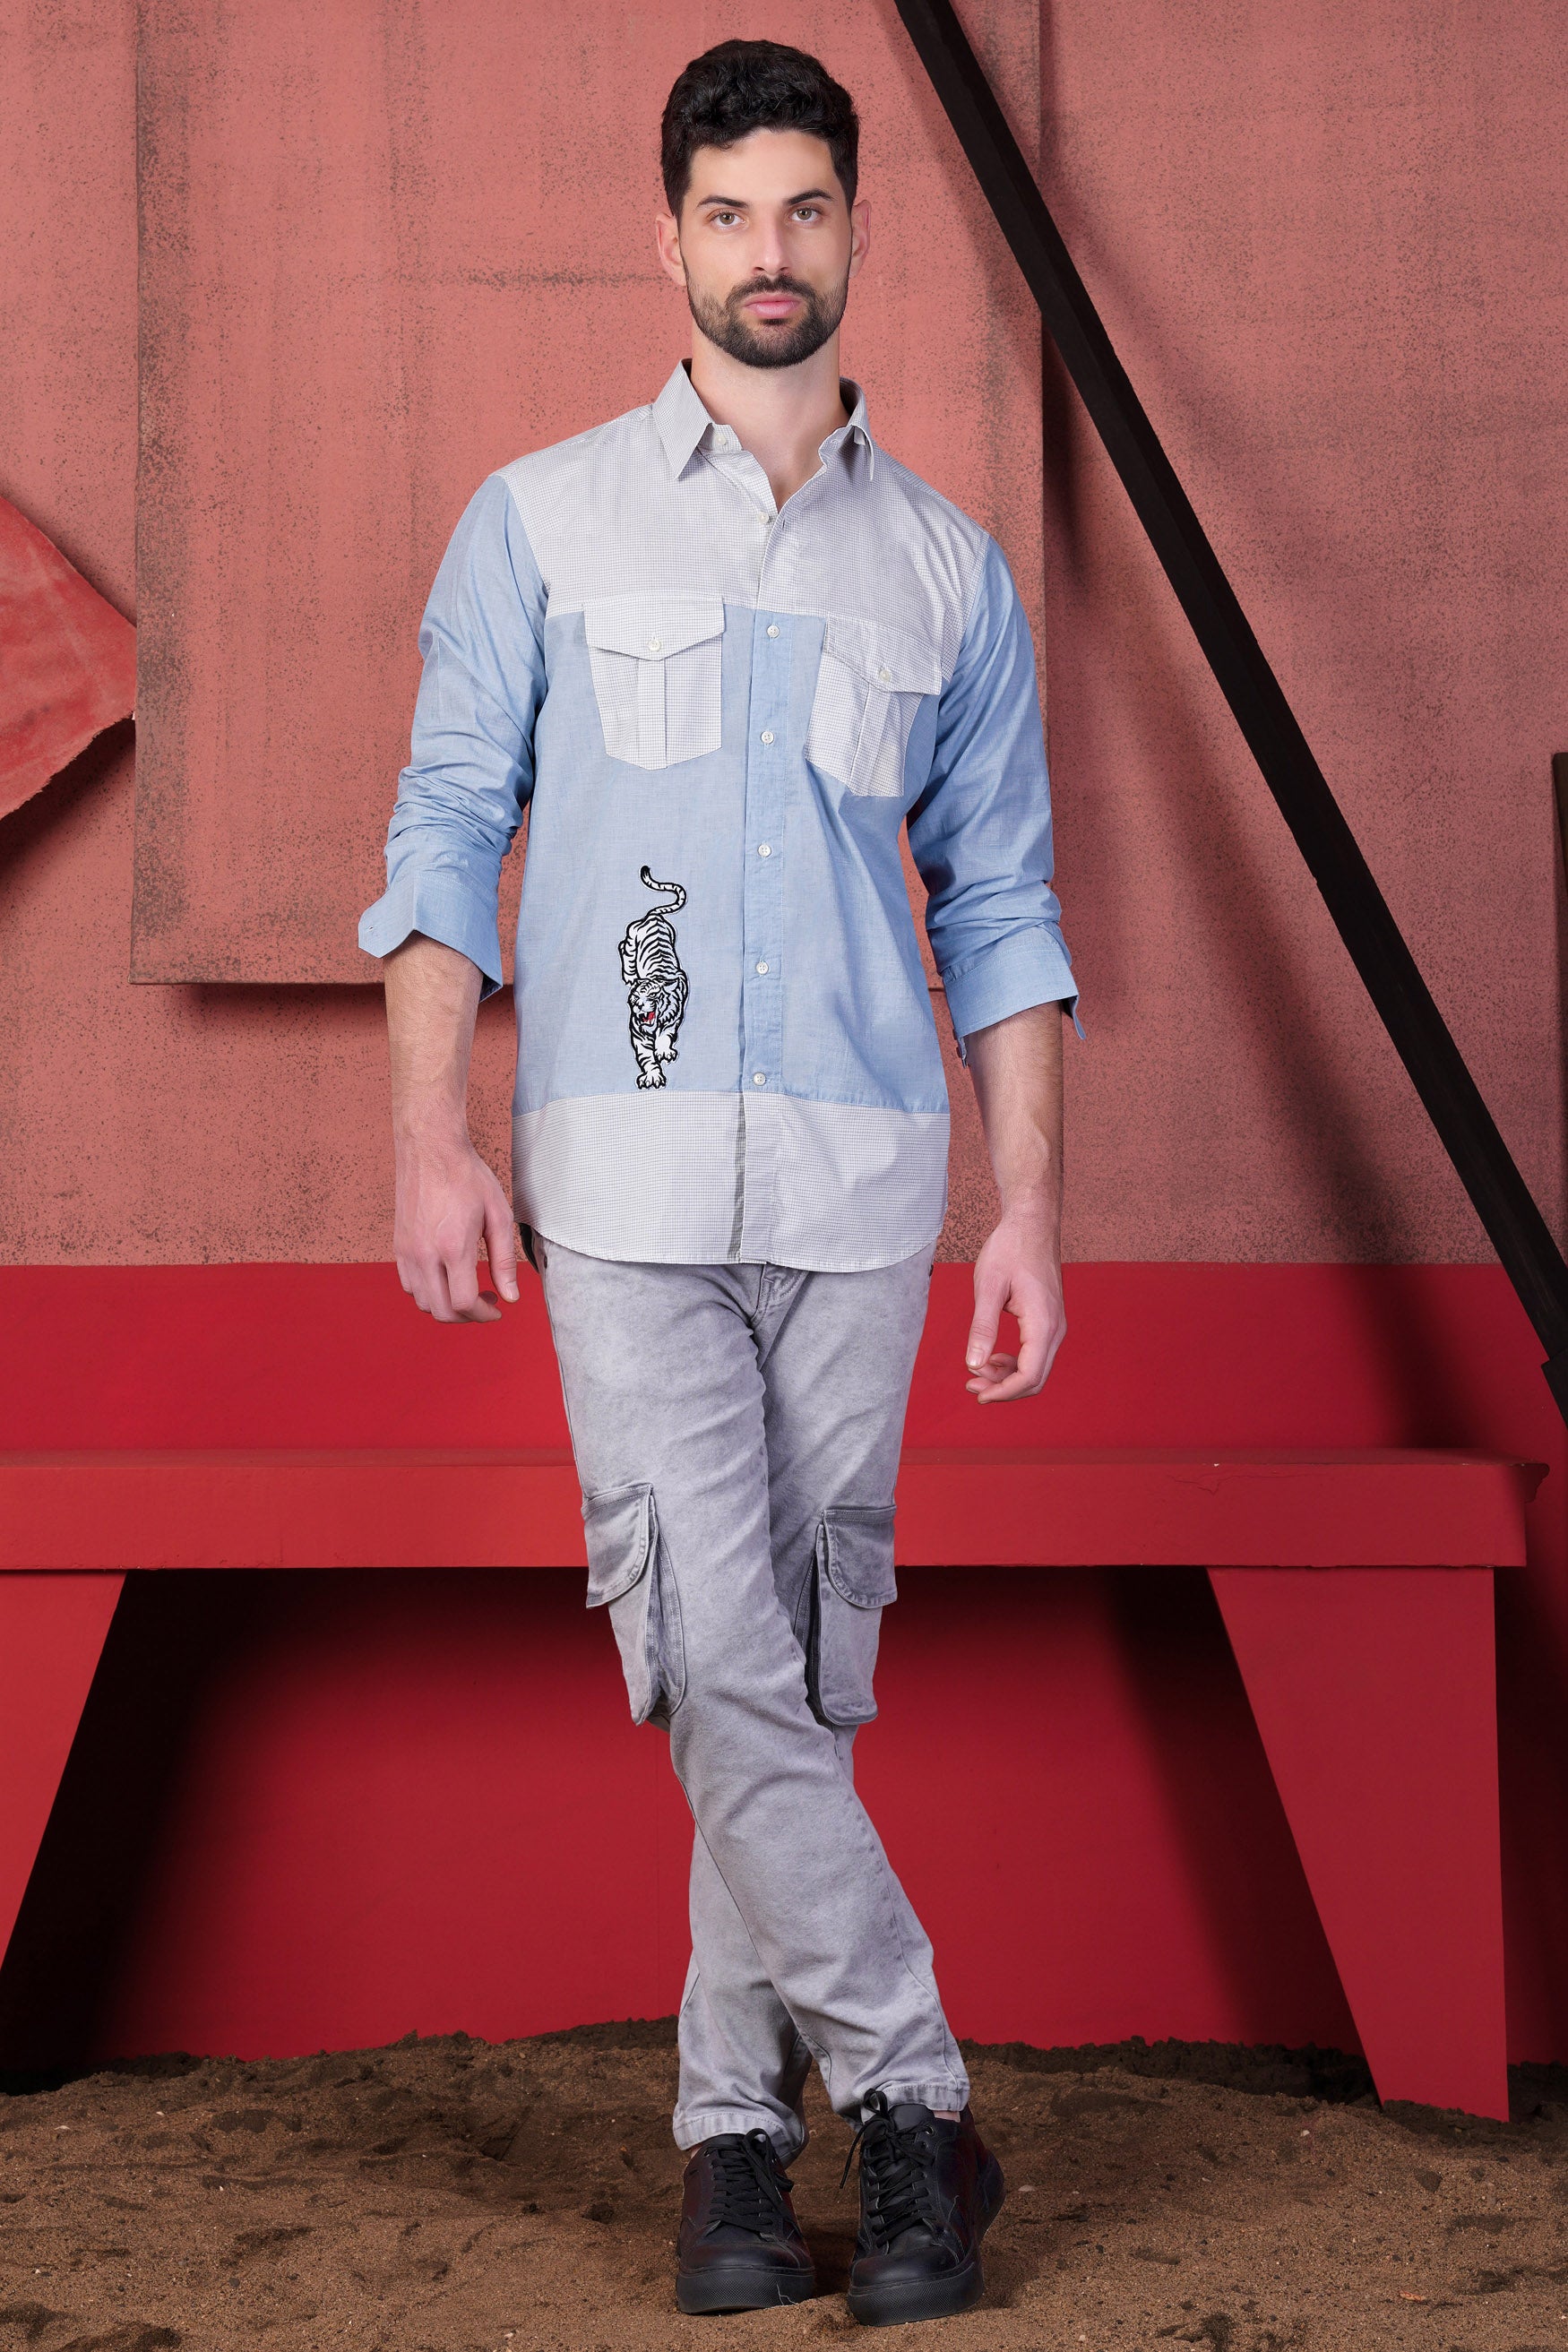 Bright White and Tealish Blue Tiger Patchwork Premium Cotton Designer Shirt